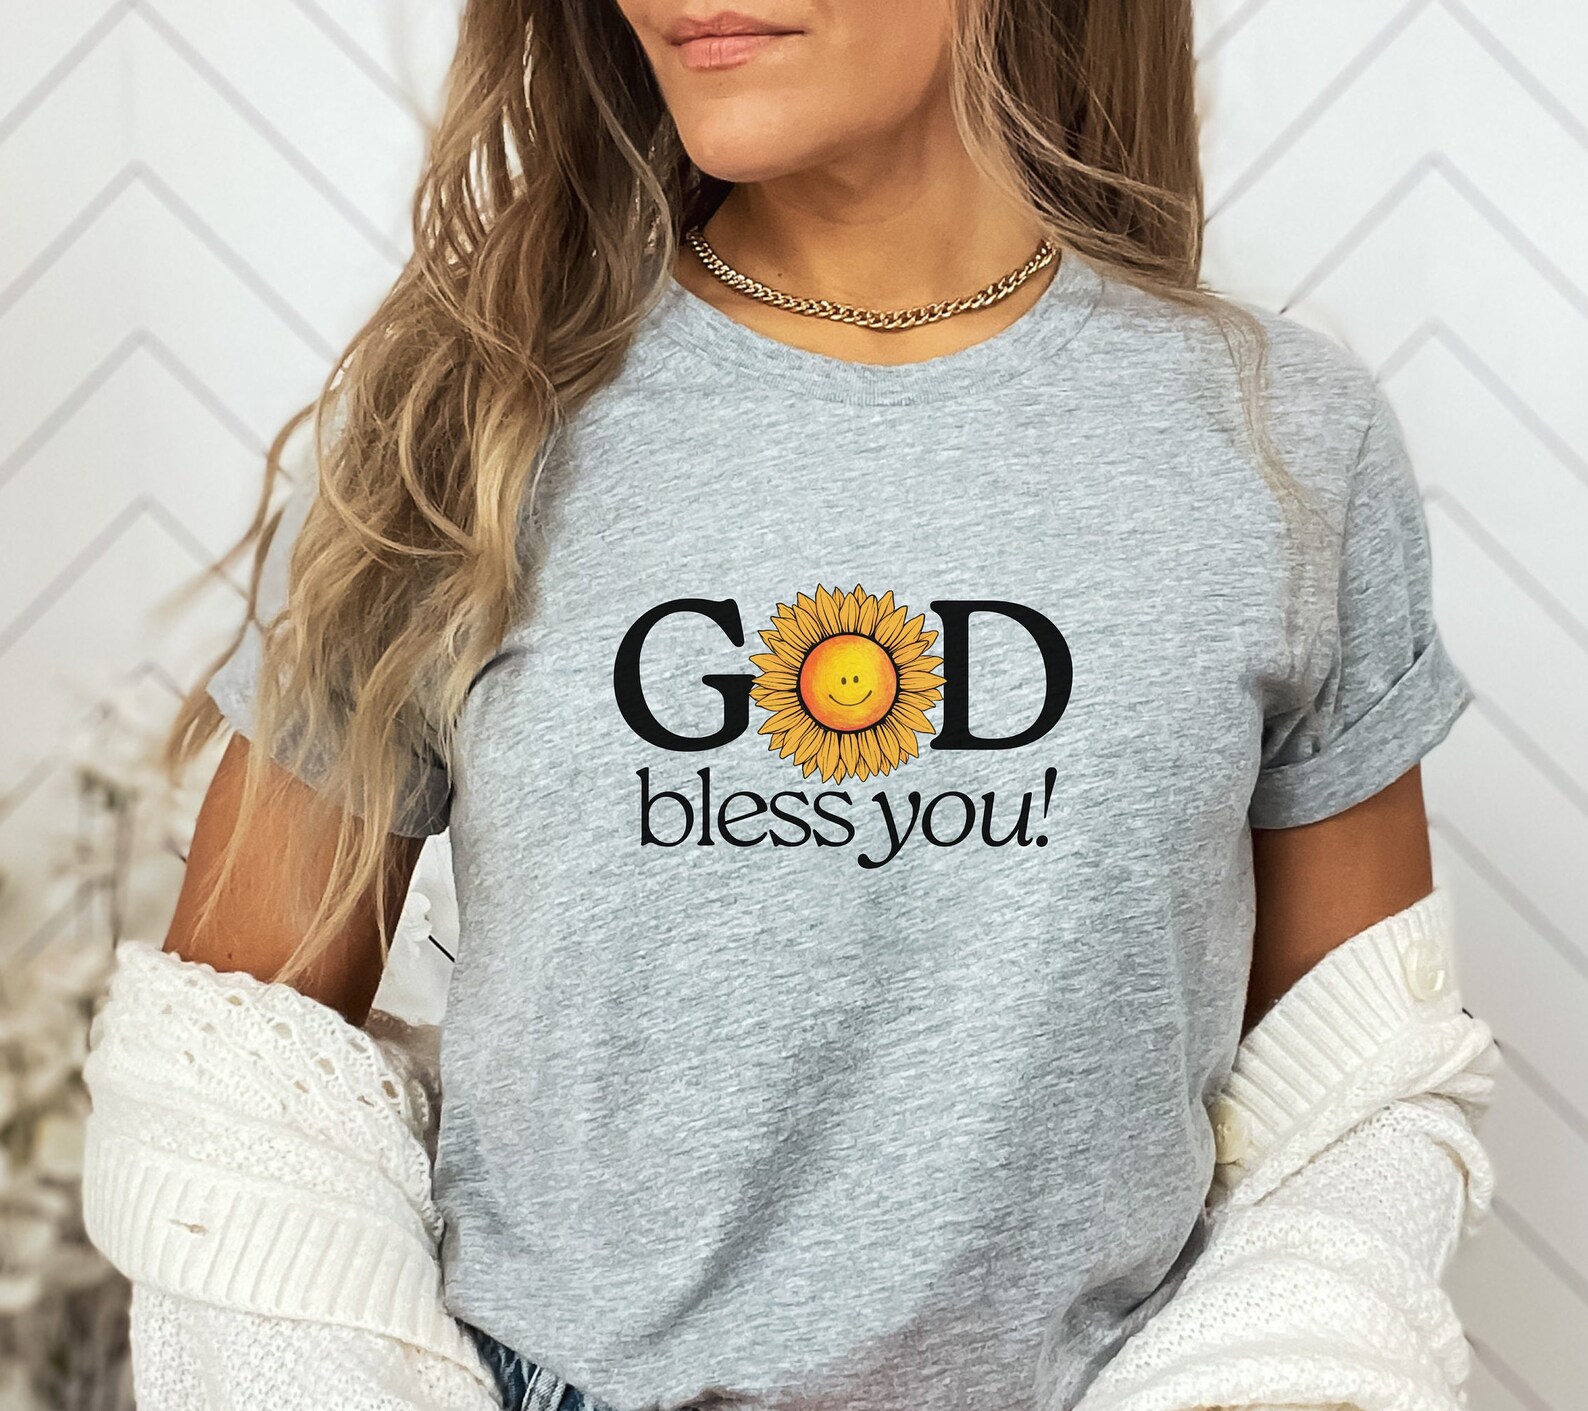 god bless you t-shirt